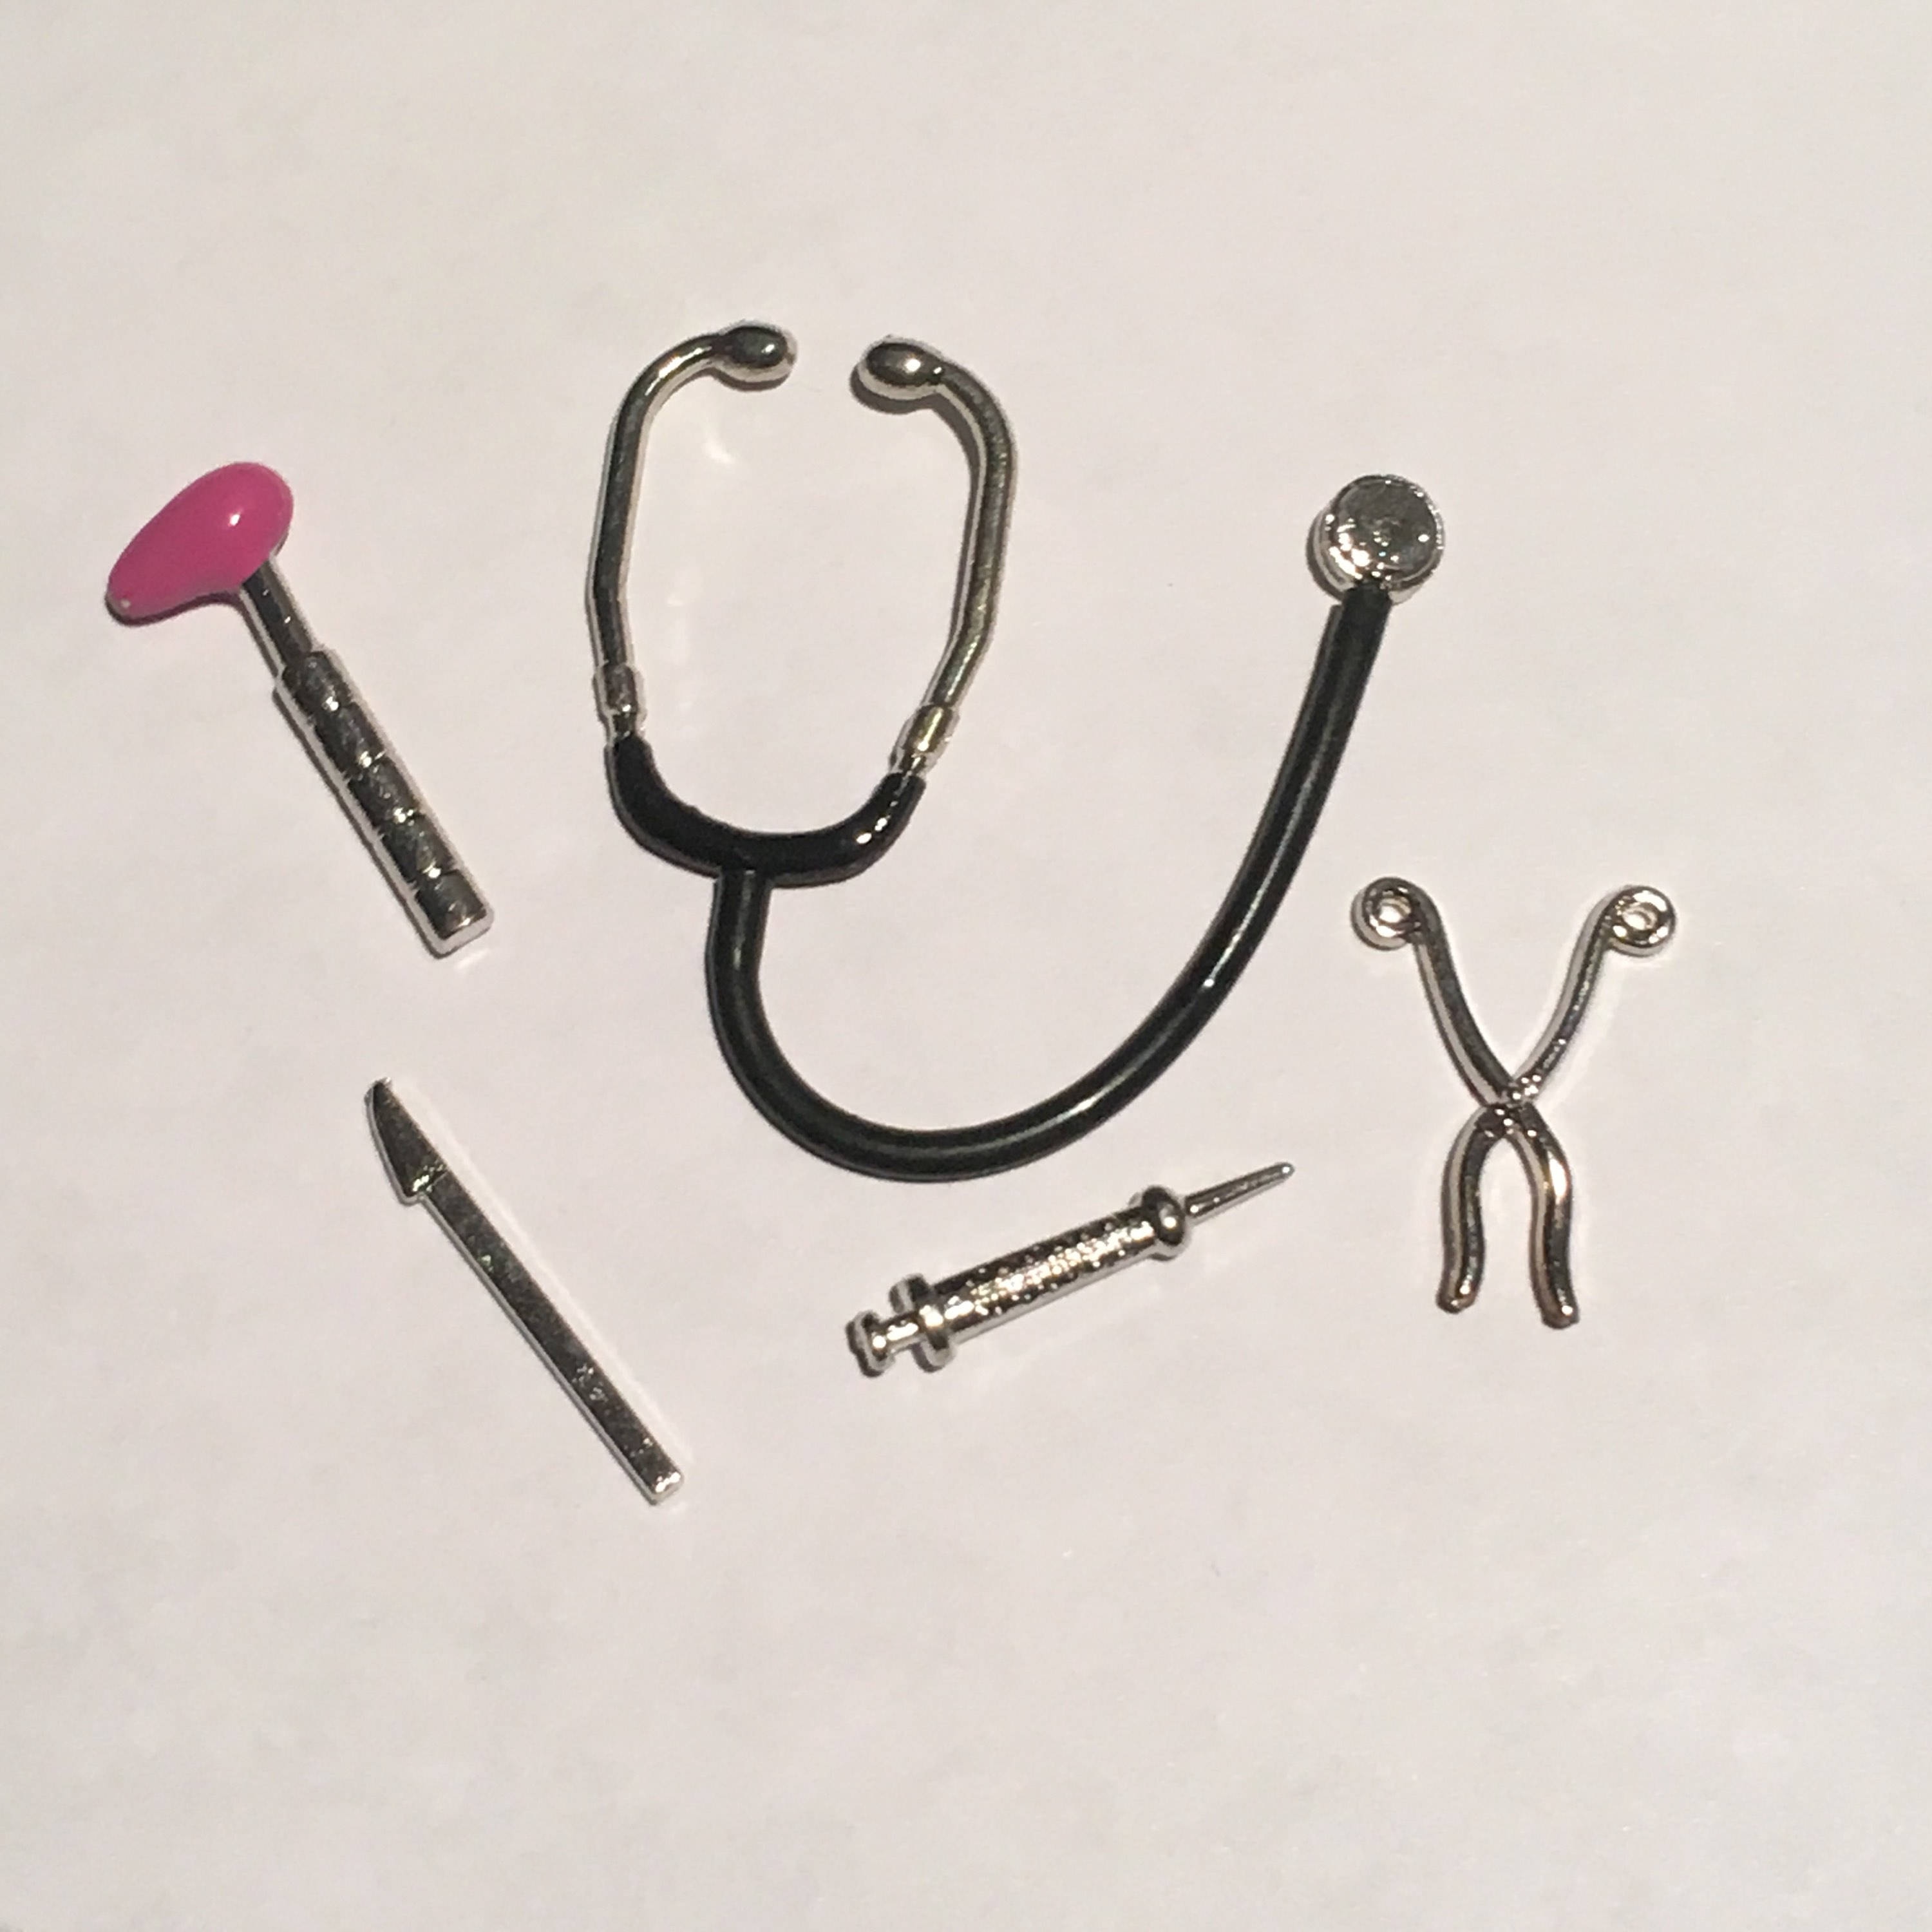 Miniatur 1:12 Metall Puppenhaus Stethoskop 